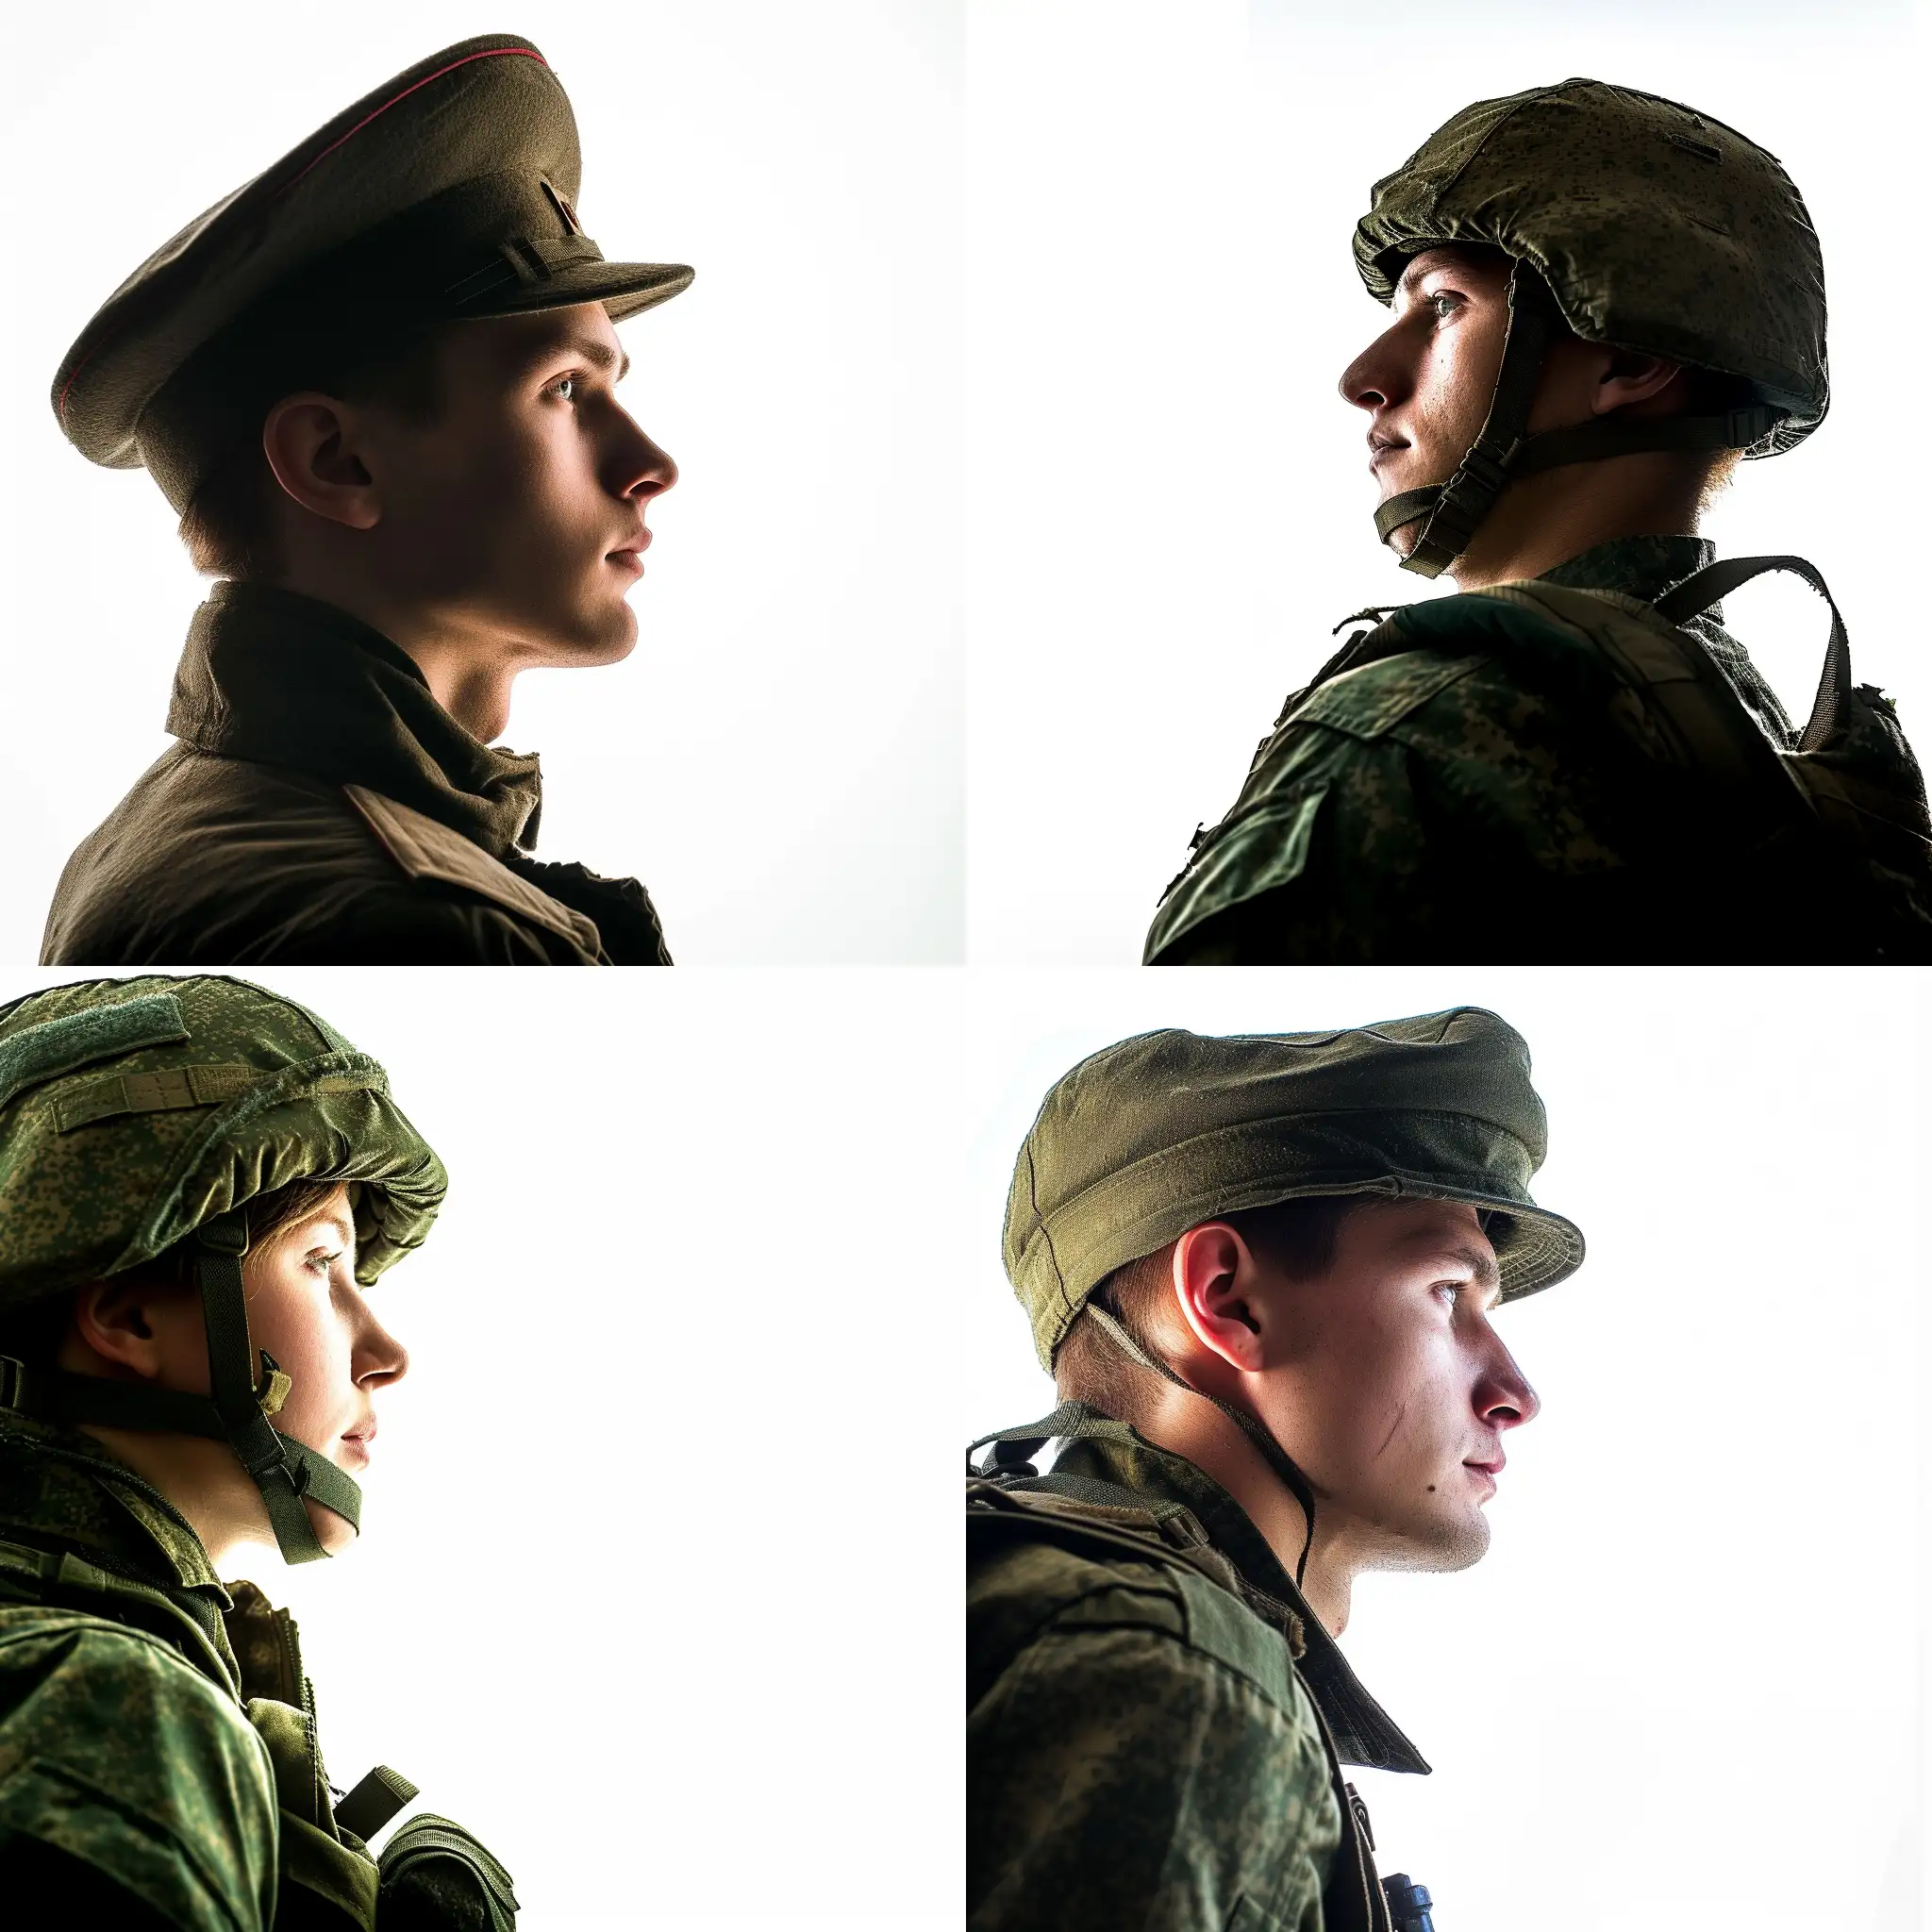 Russian-Soldier-Profile-Portrait-on-White-Background